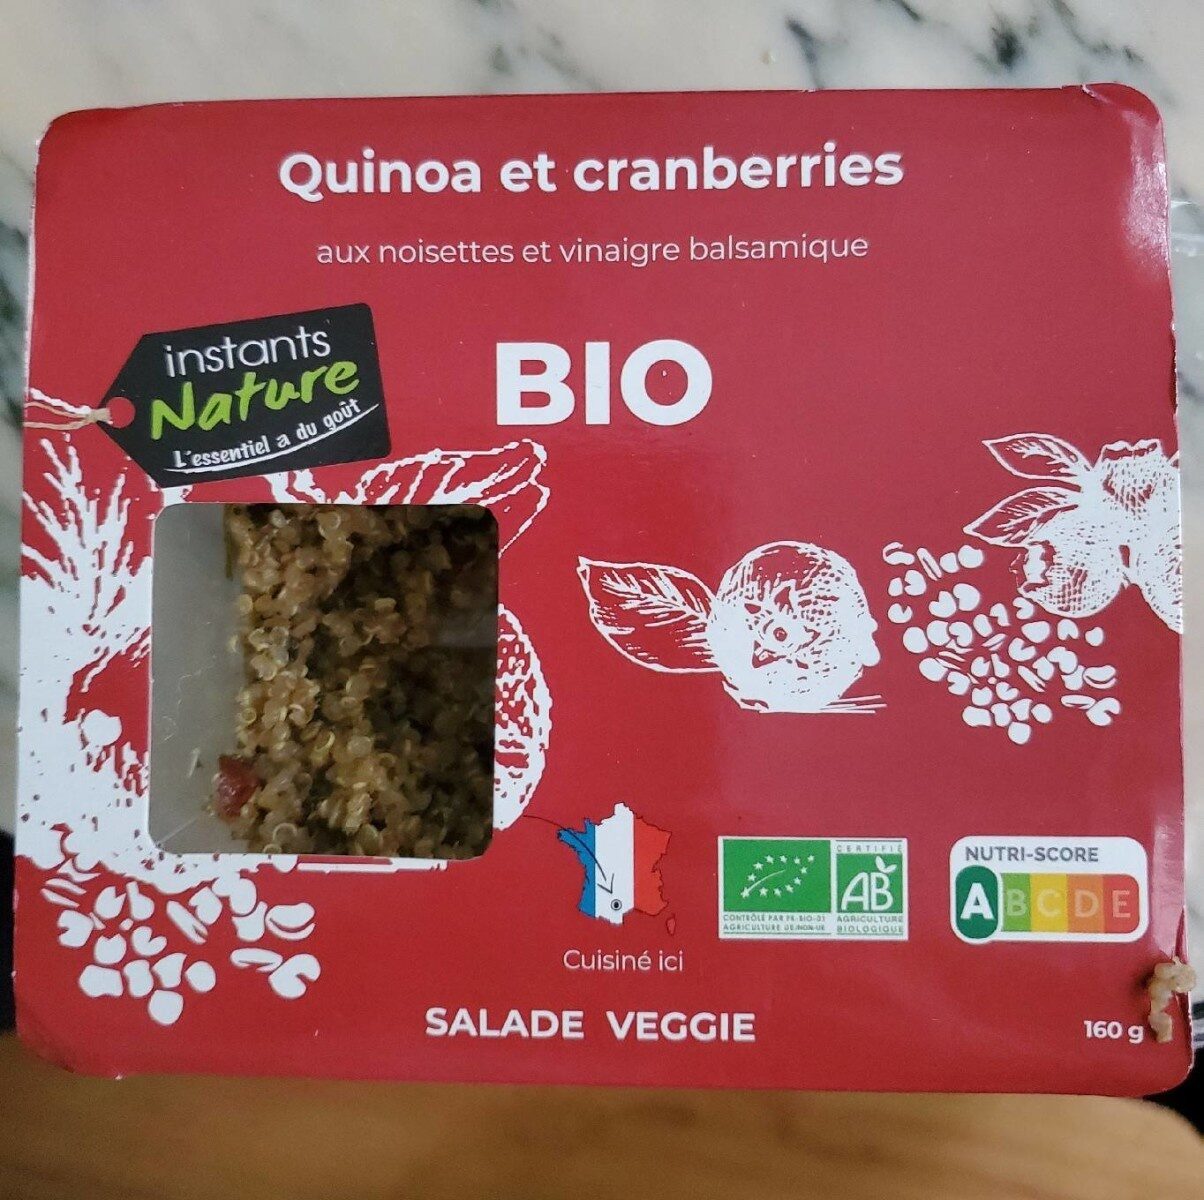 Instants Nature Quinoa et cranberries - Produkt - fr